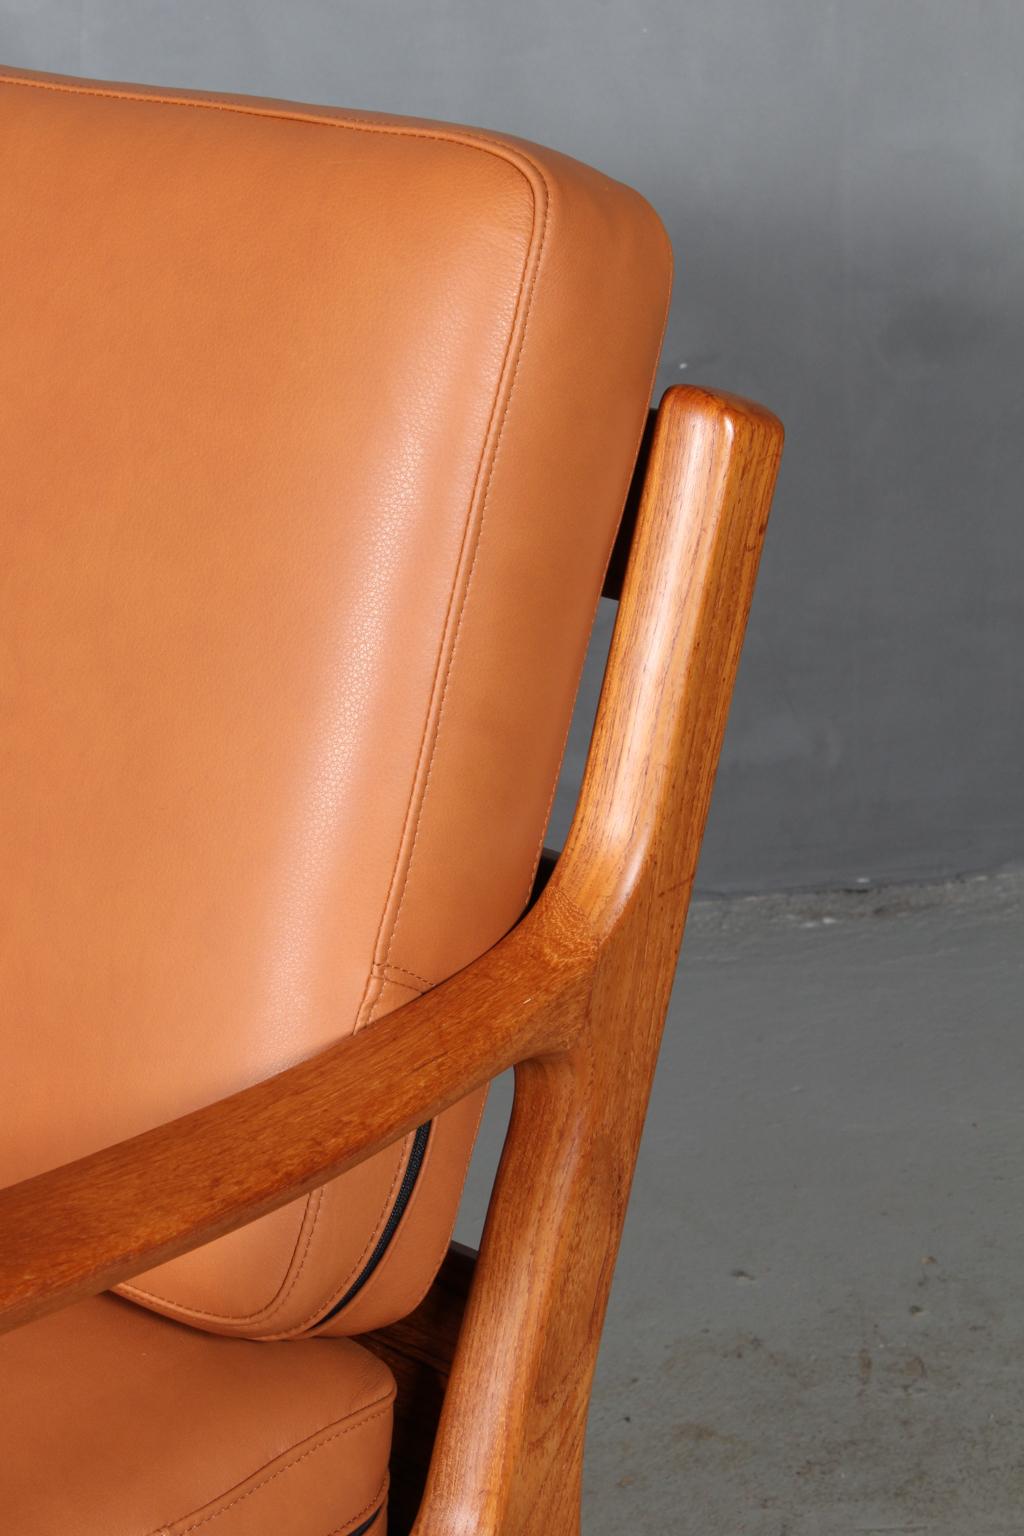 Ole Wanscher Two-Seat Sofa and Lounge Chair, Model Senator, Teak & Leather (Leder)